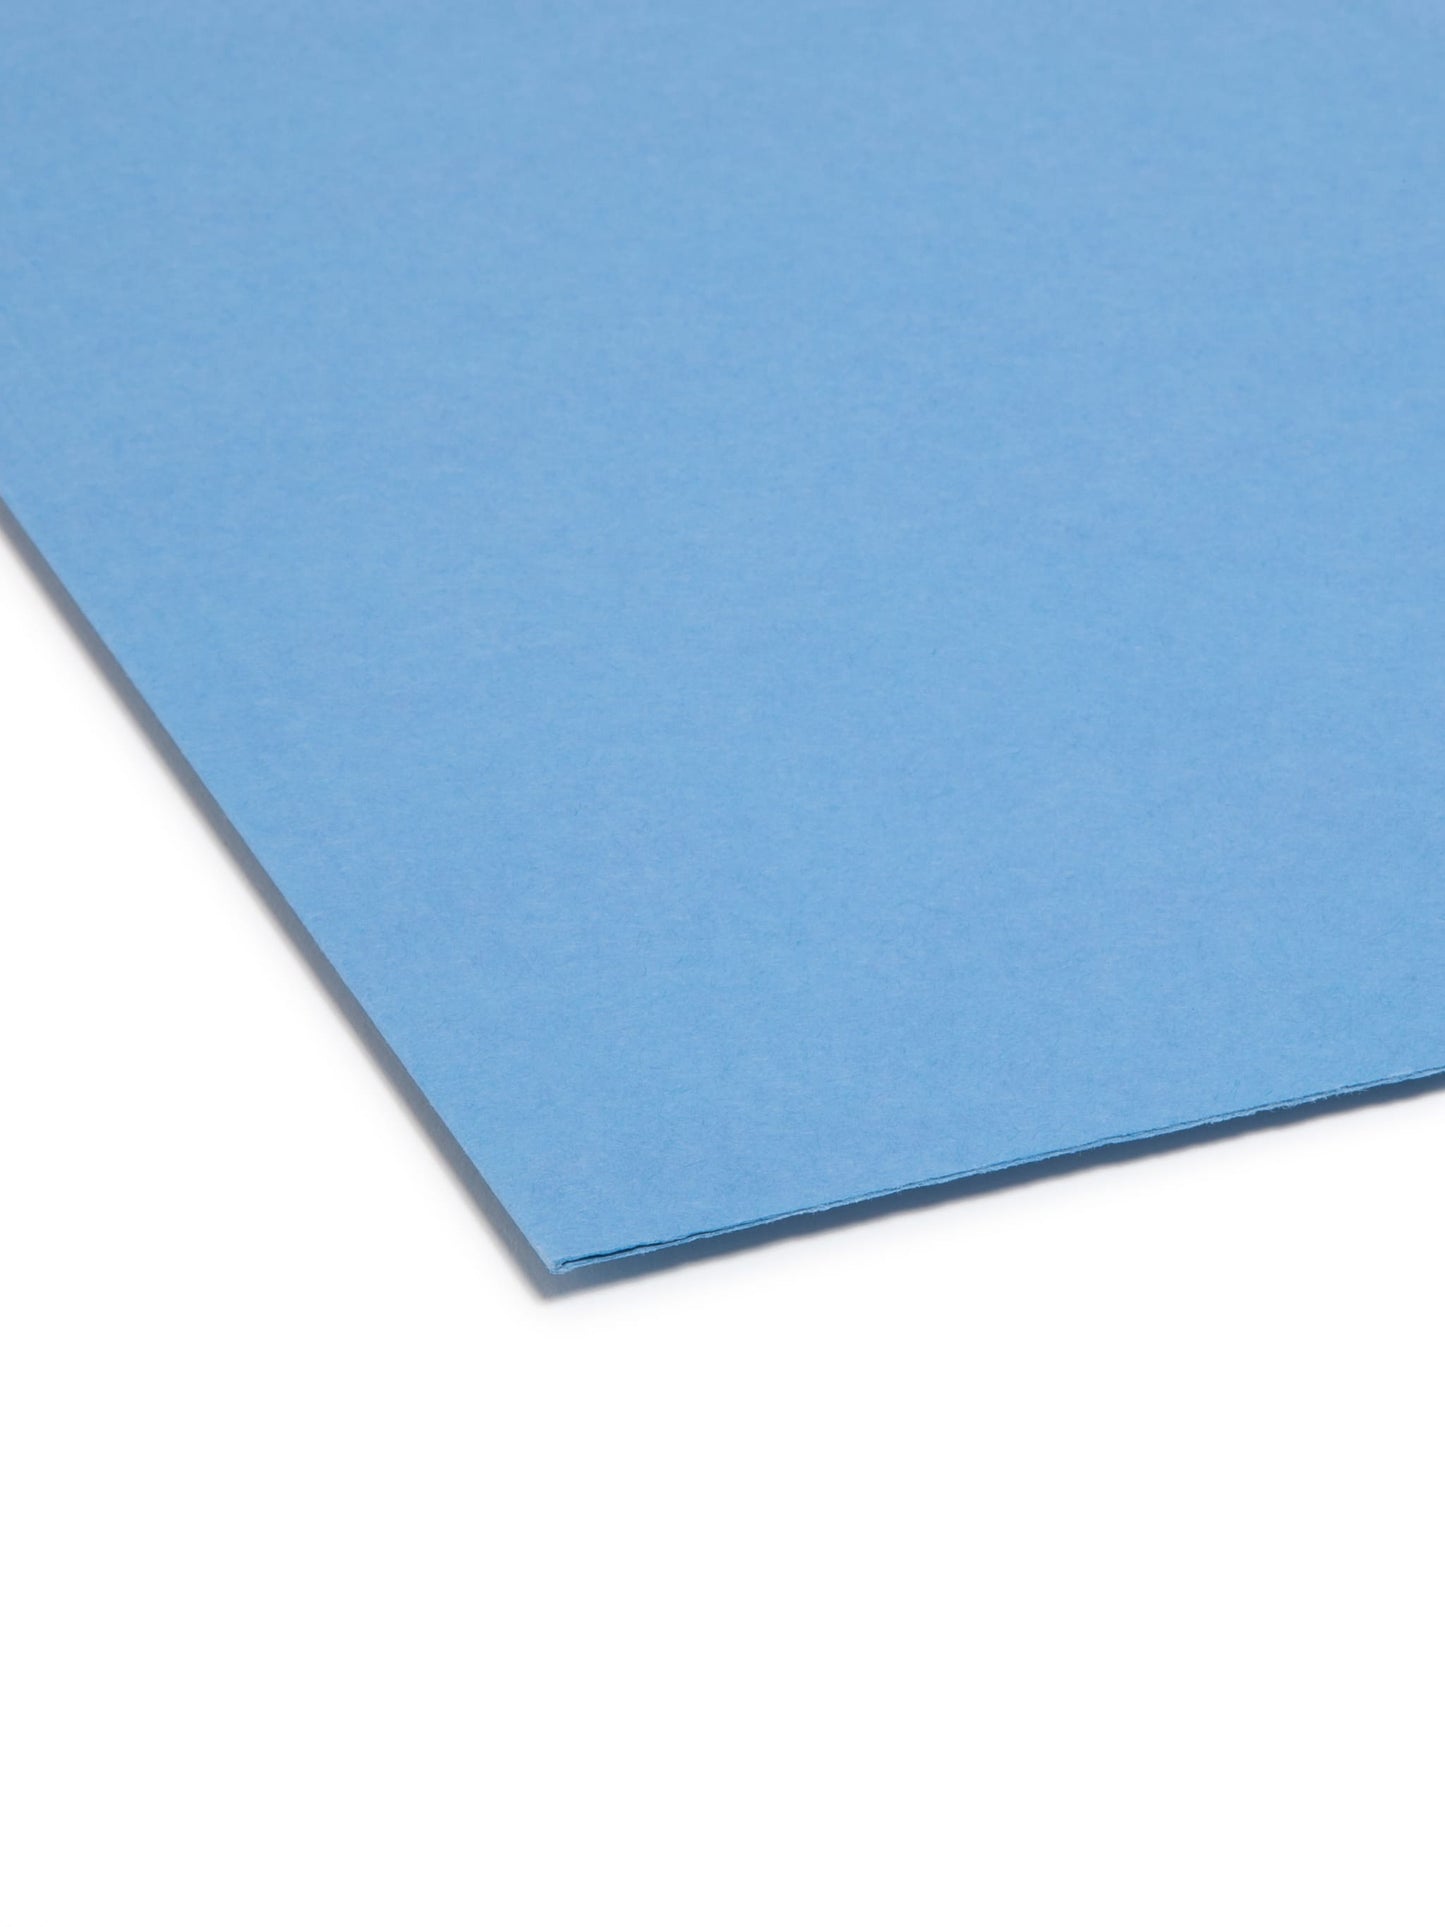 Standard File Folders, Straight-Cut Tab, Blue Color, Letter Size, Set of 100, 086486109352